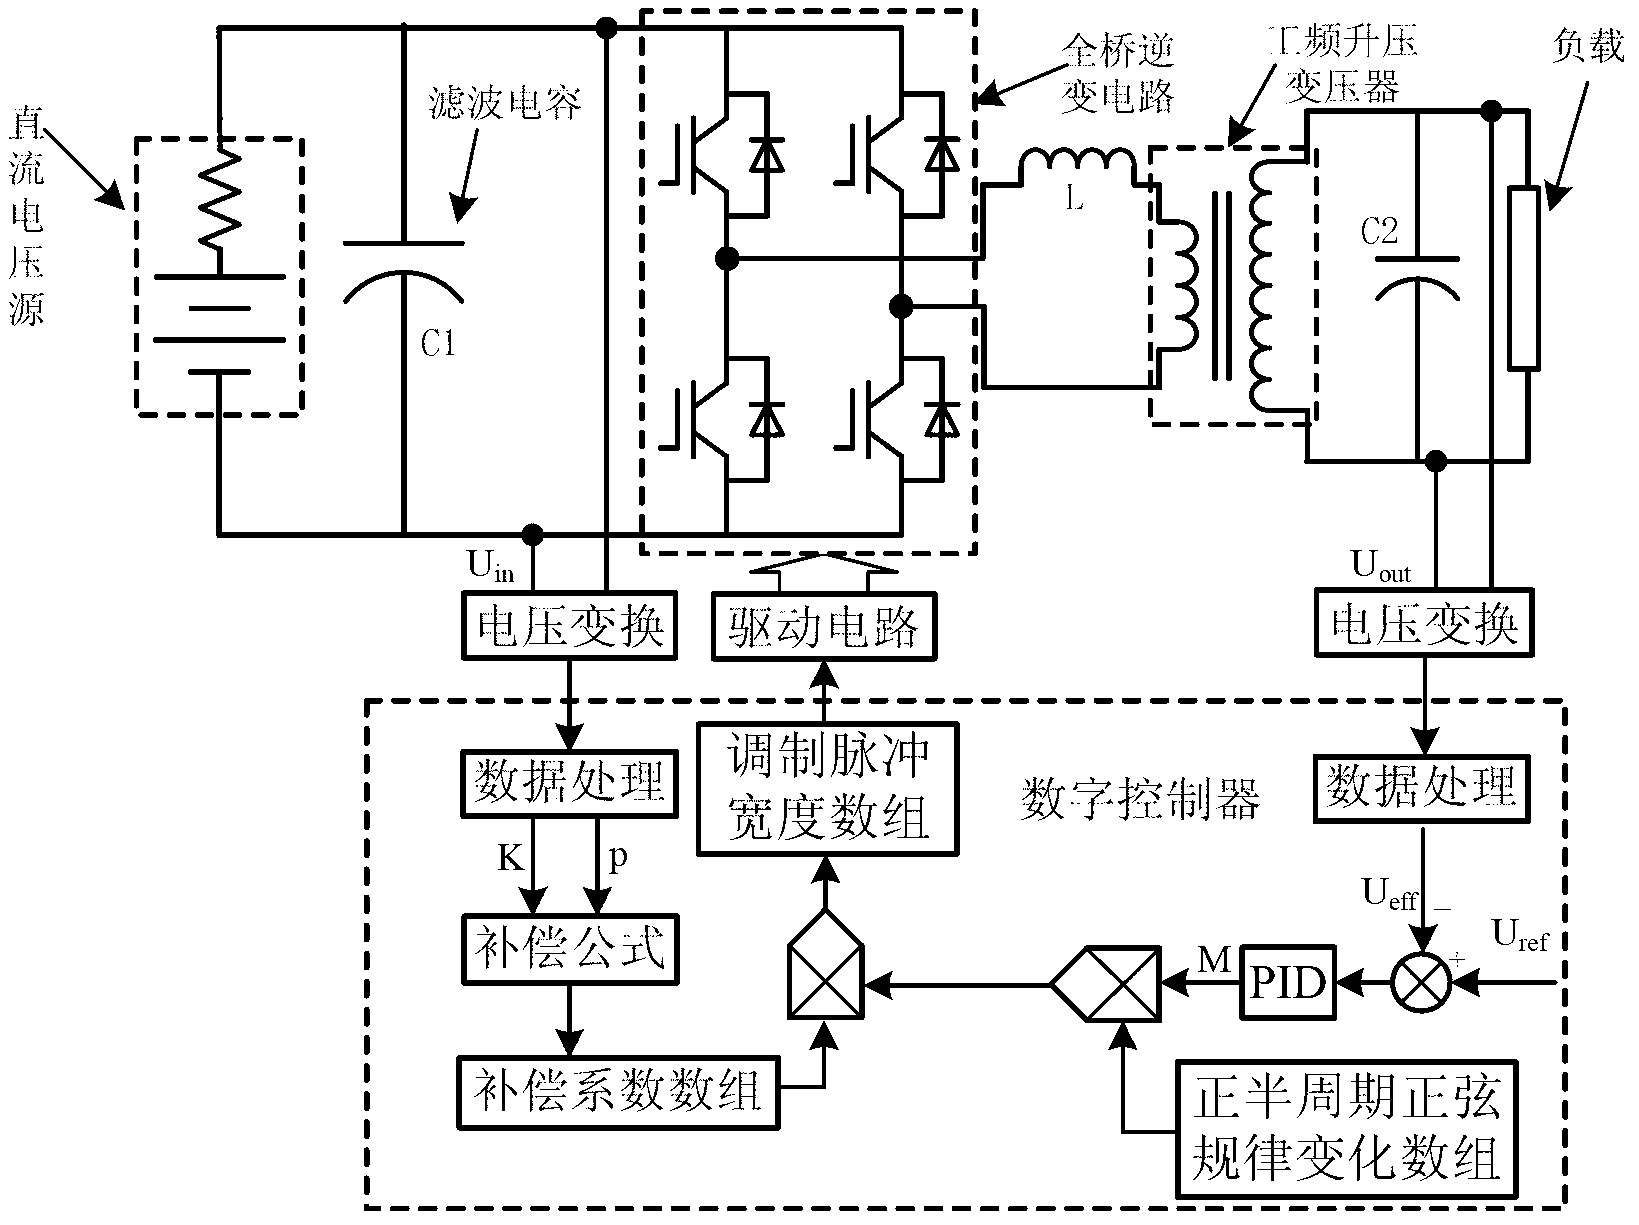 Ripple modulation compensation method for input voltage of single-phase inverter